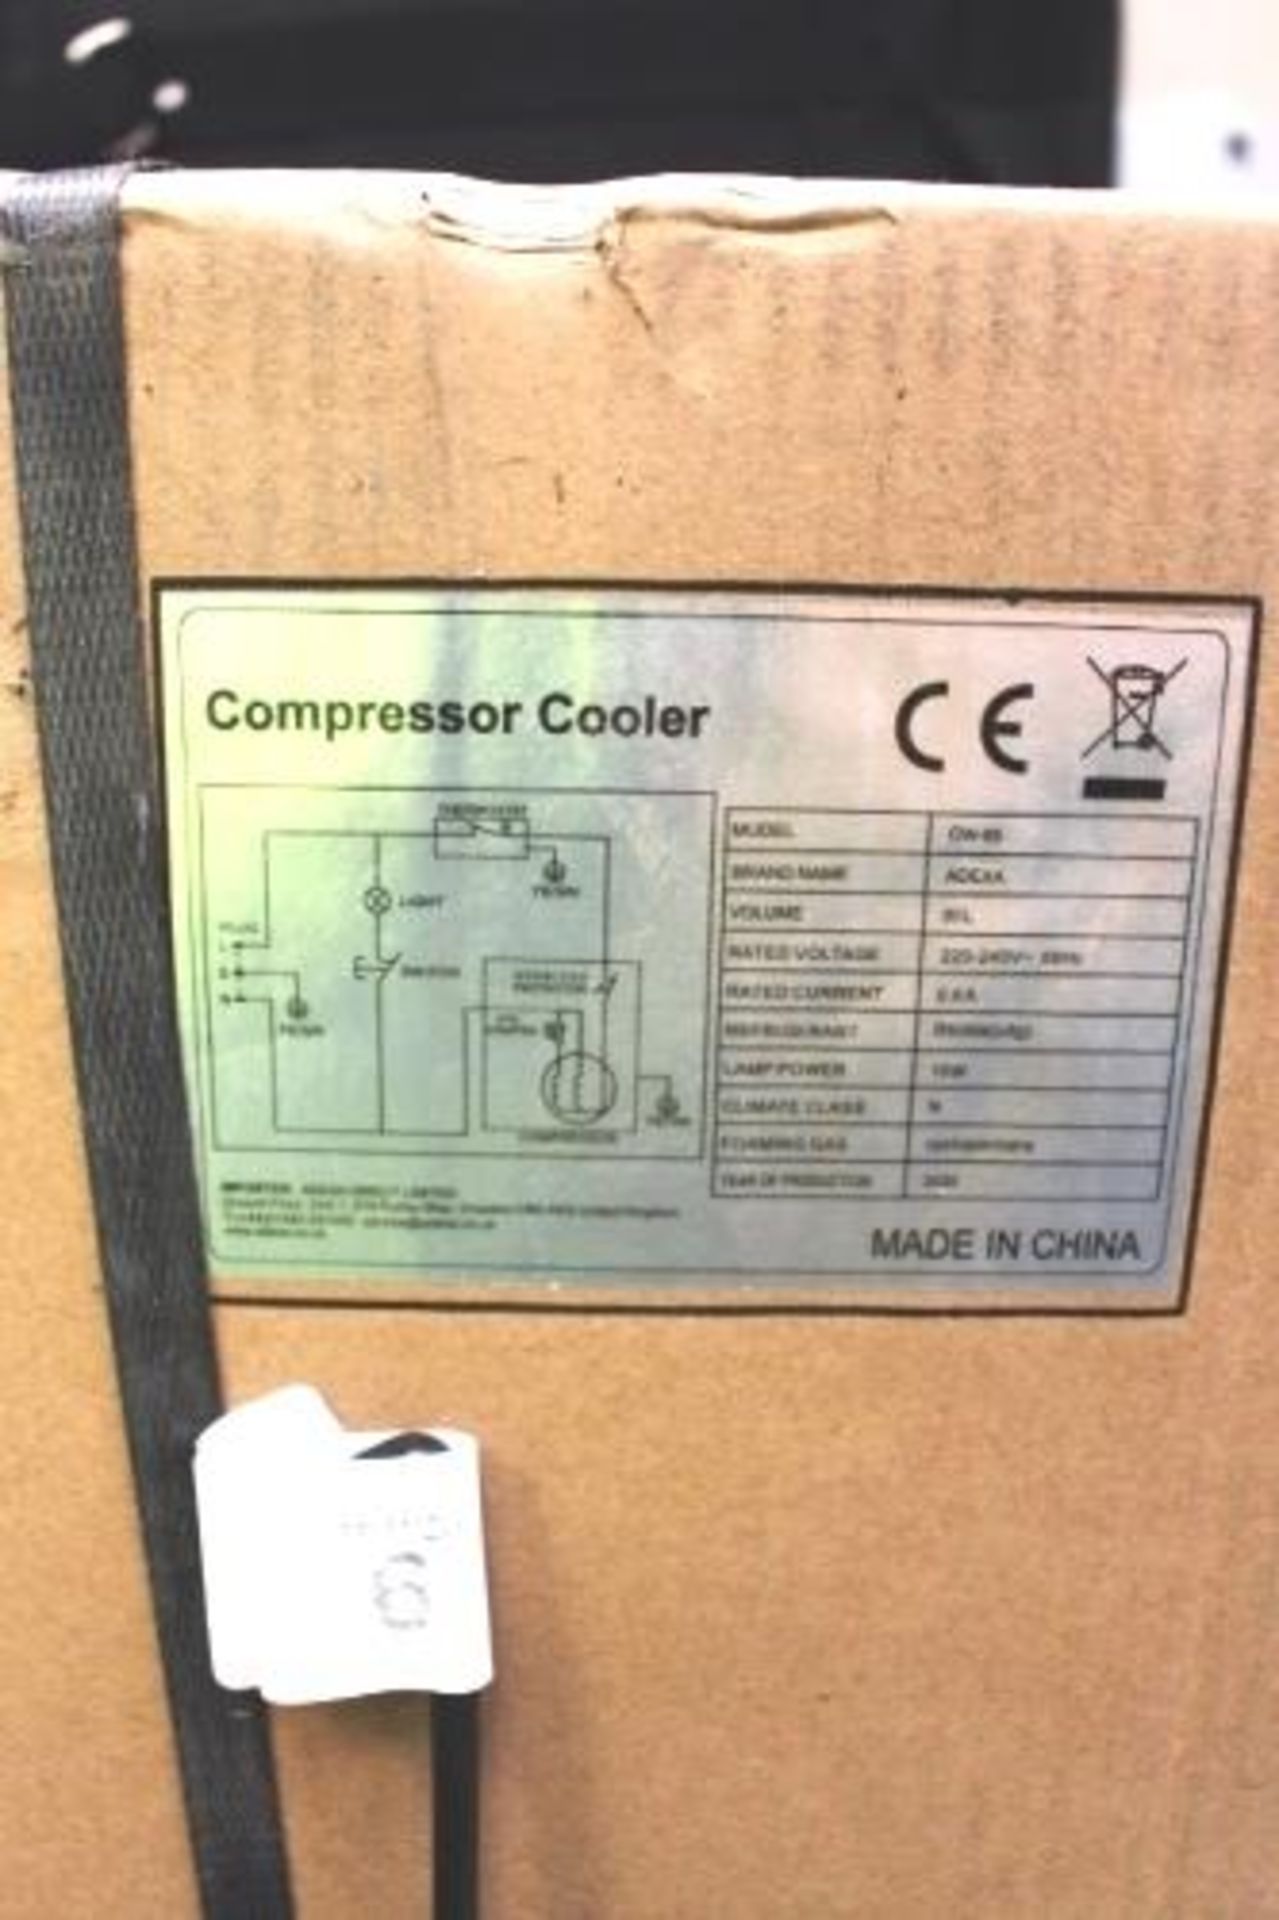 Adexa compressor cooler, 80ltr, model CW-85 - Sealed new in box (ES2) - Image 2 of 2